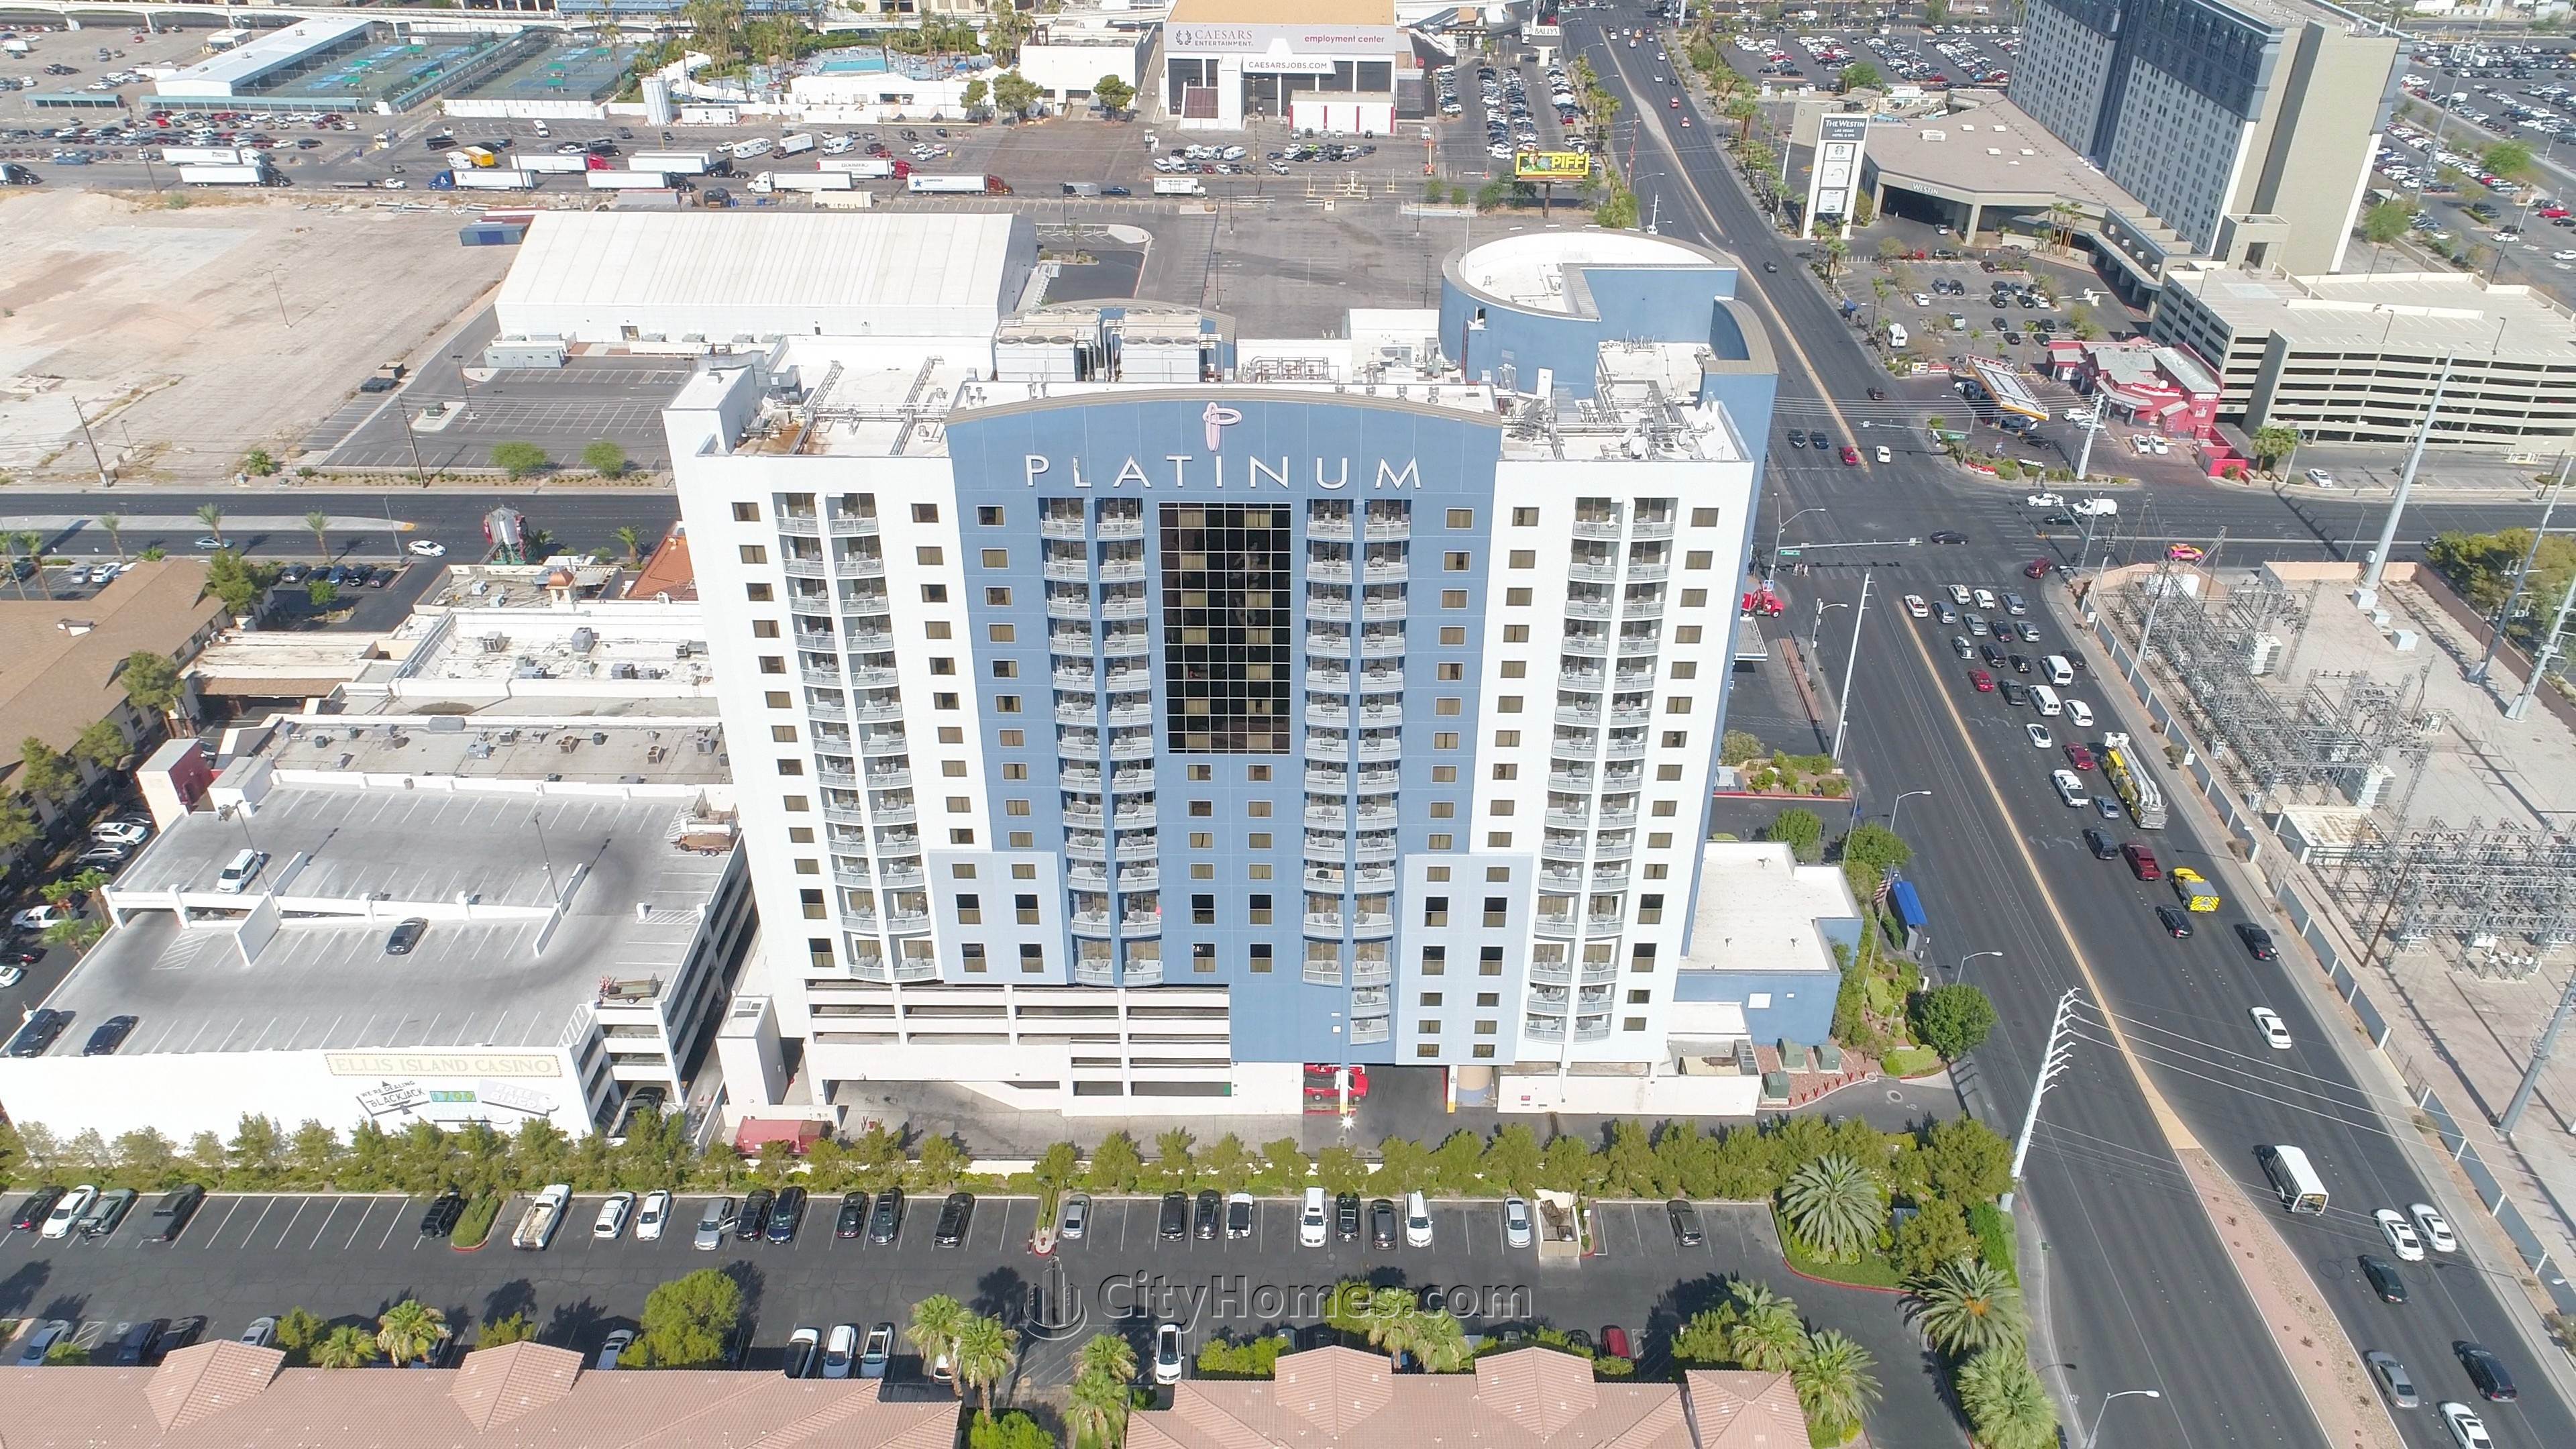 Platinum Resort edificio a 211 E Flamingo Road, Paradise, Las Vegas, NV 89169